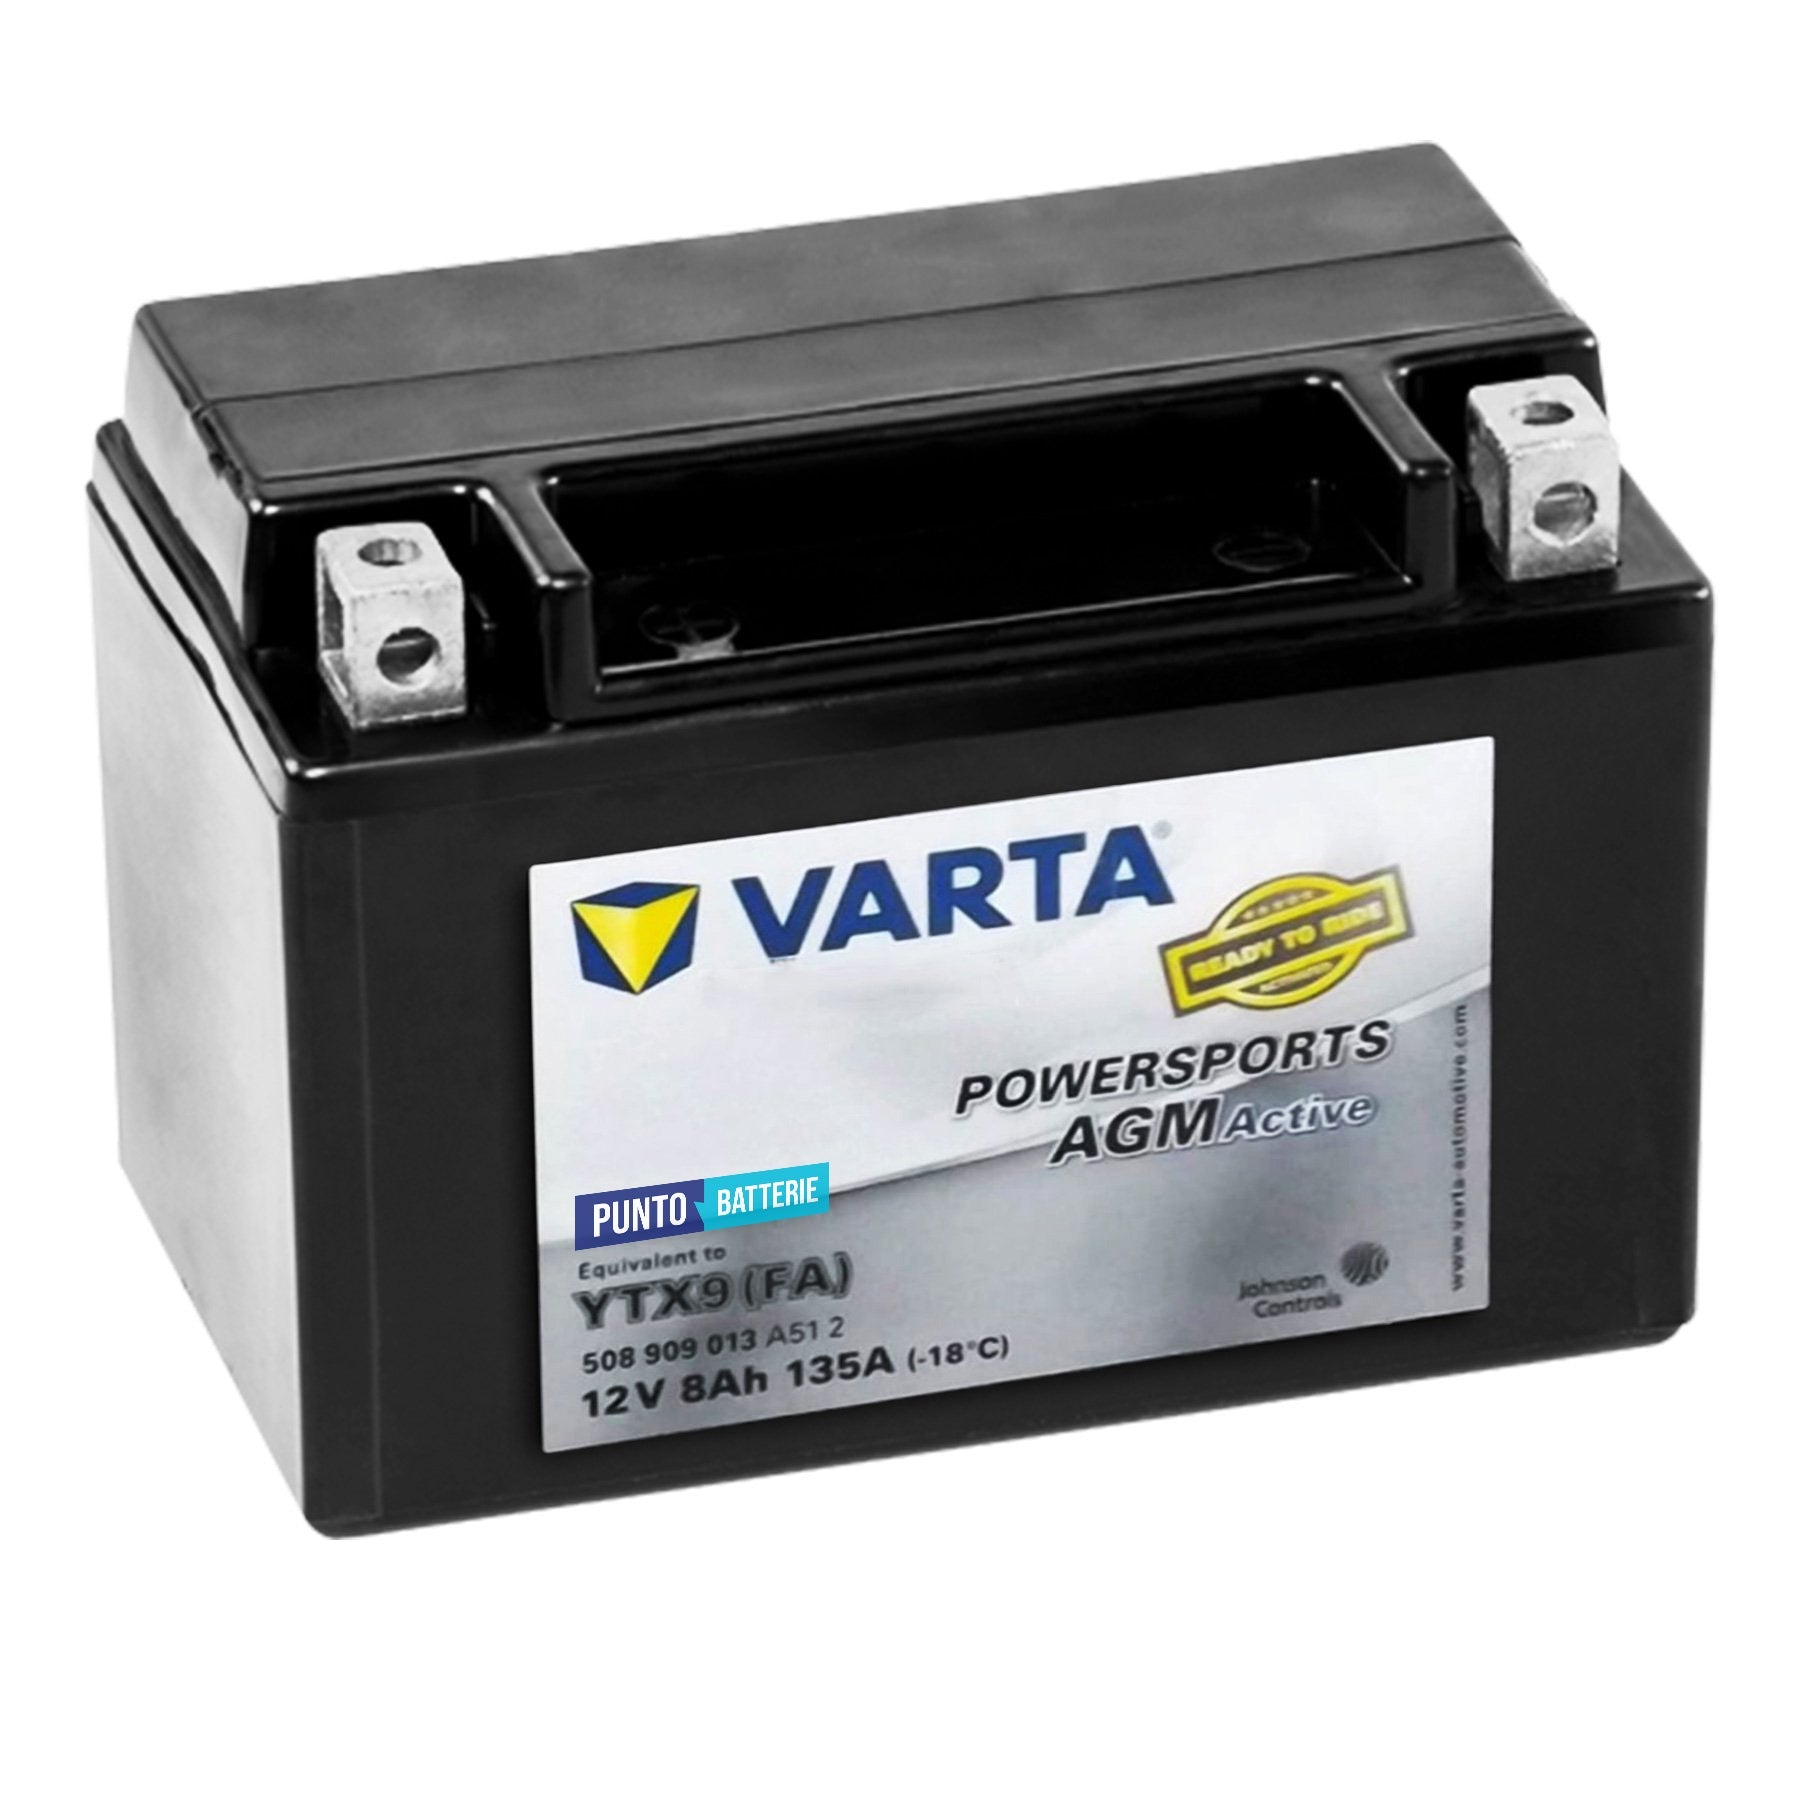 Batteria originale Varta Powersport AGM Active YTX9-FA, dimensioni 150 x 87 x 130, polo positivo a sinistra, 12 volt, 8 amperora, 135 ampere. Batteria per moto, scooter e powersport.